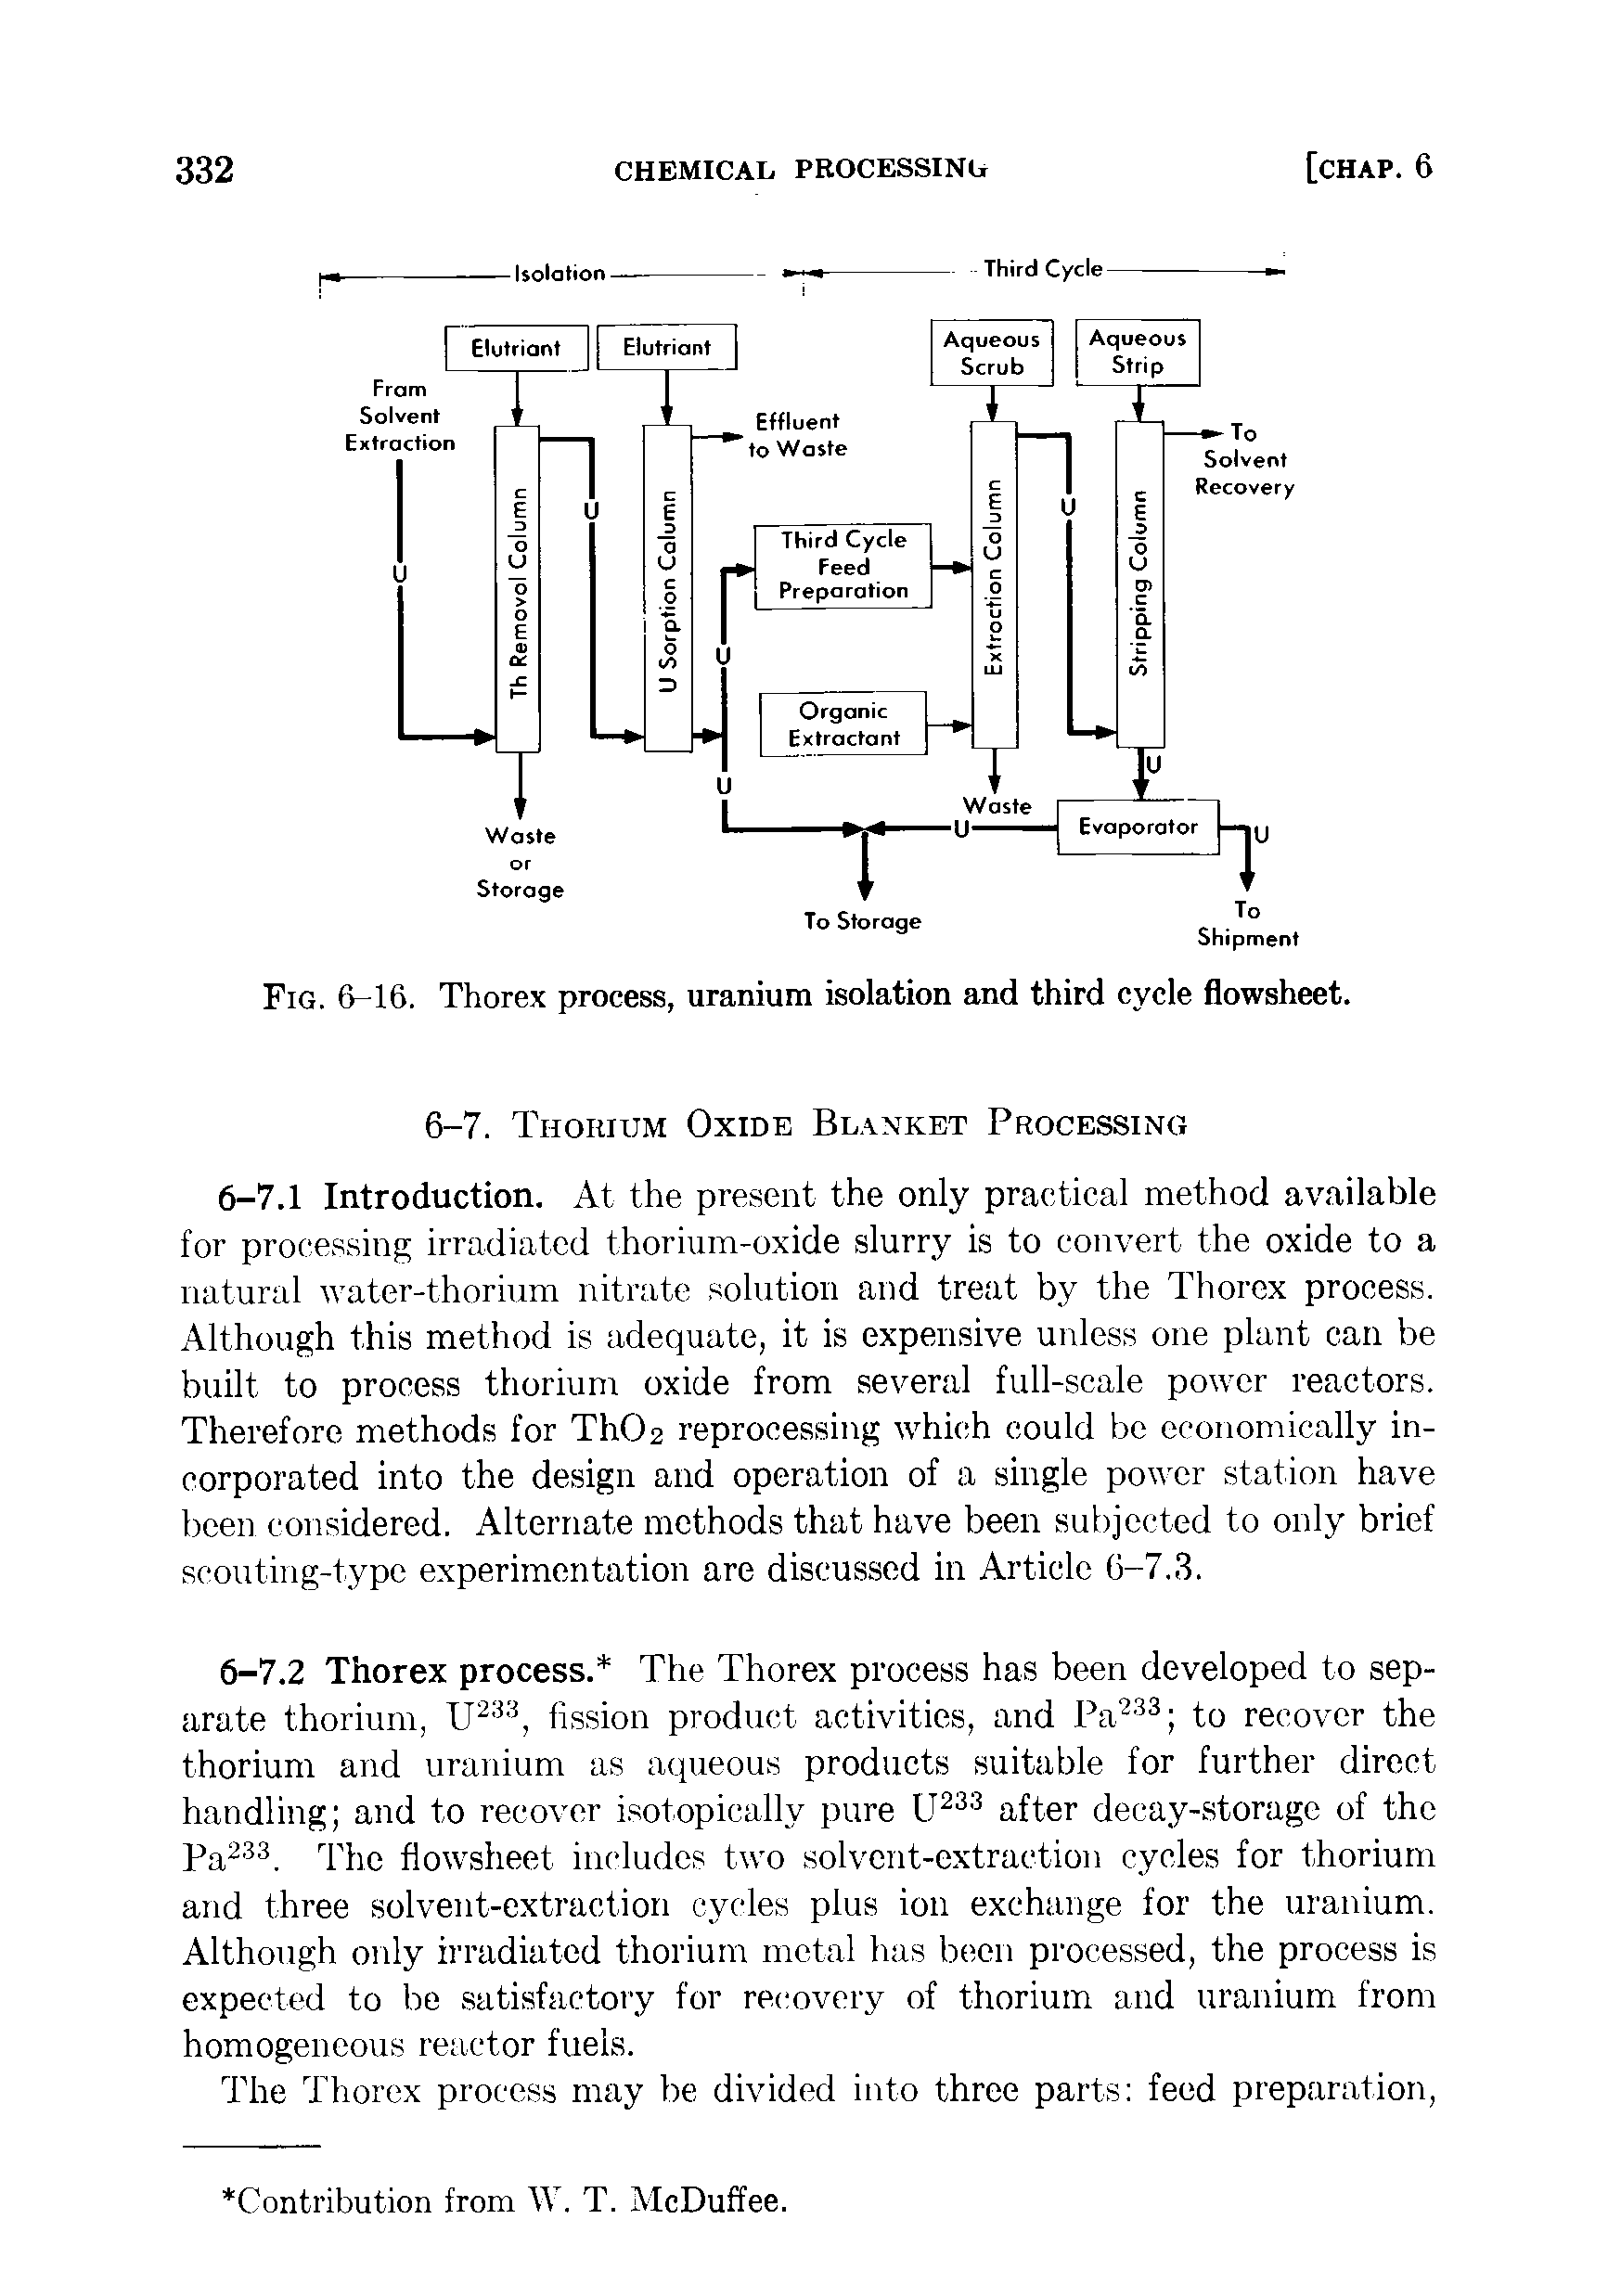 Fig. 6-16. Thorex process, uranium isolation and third cycle flowsheet.